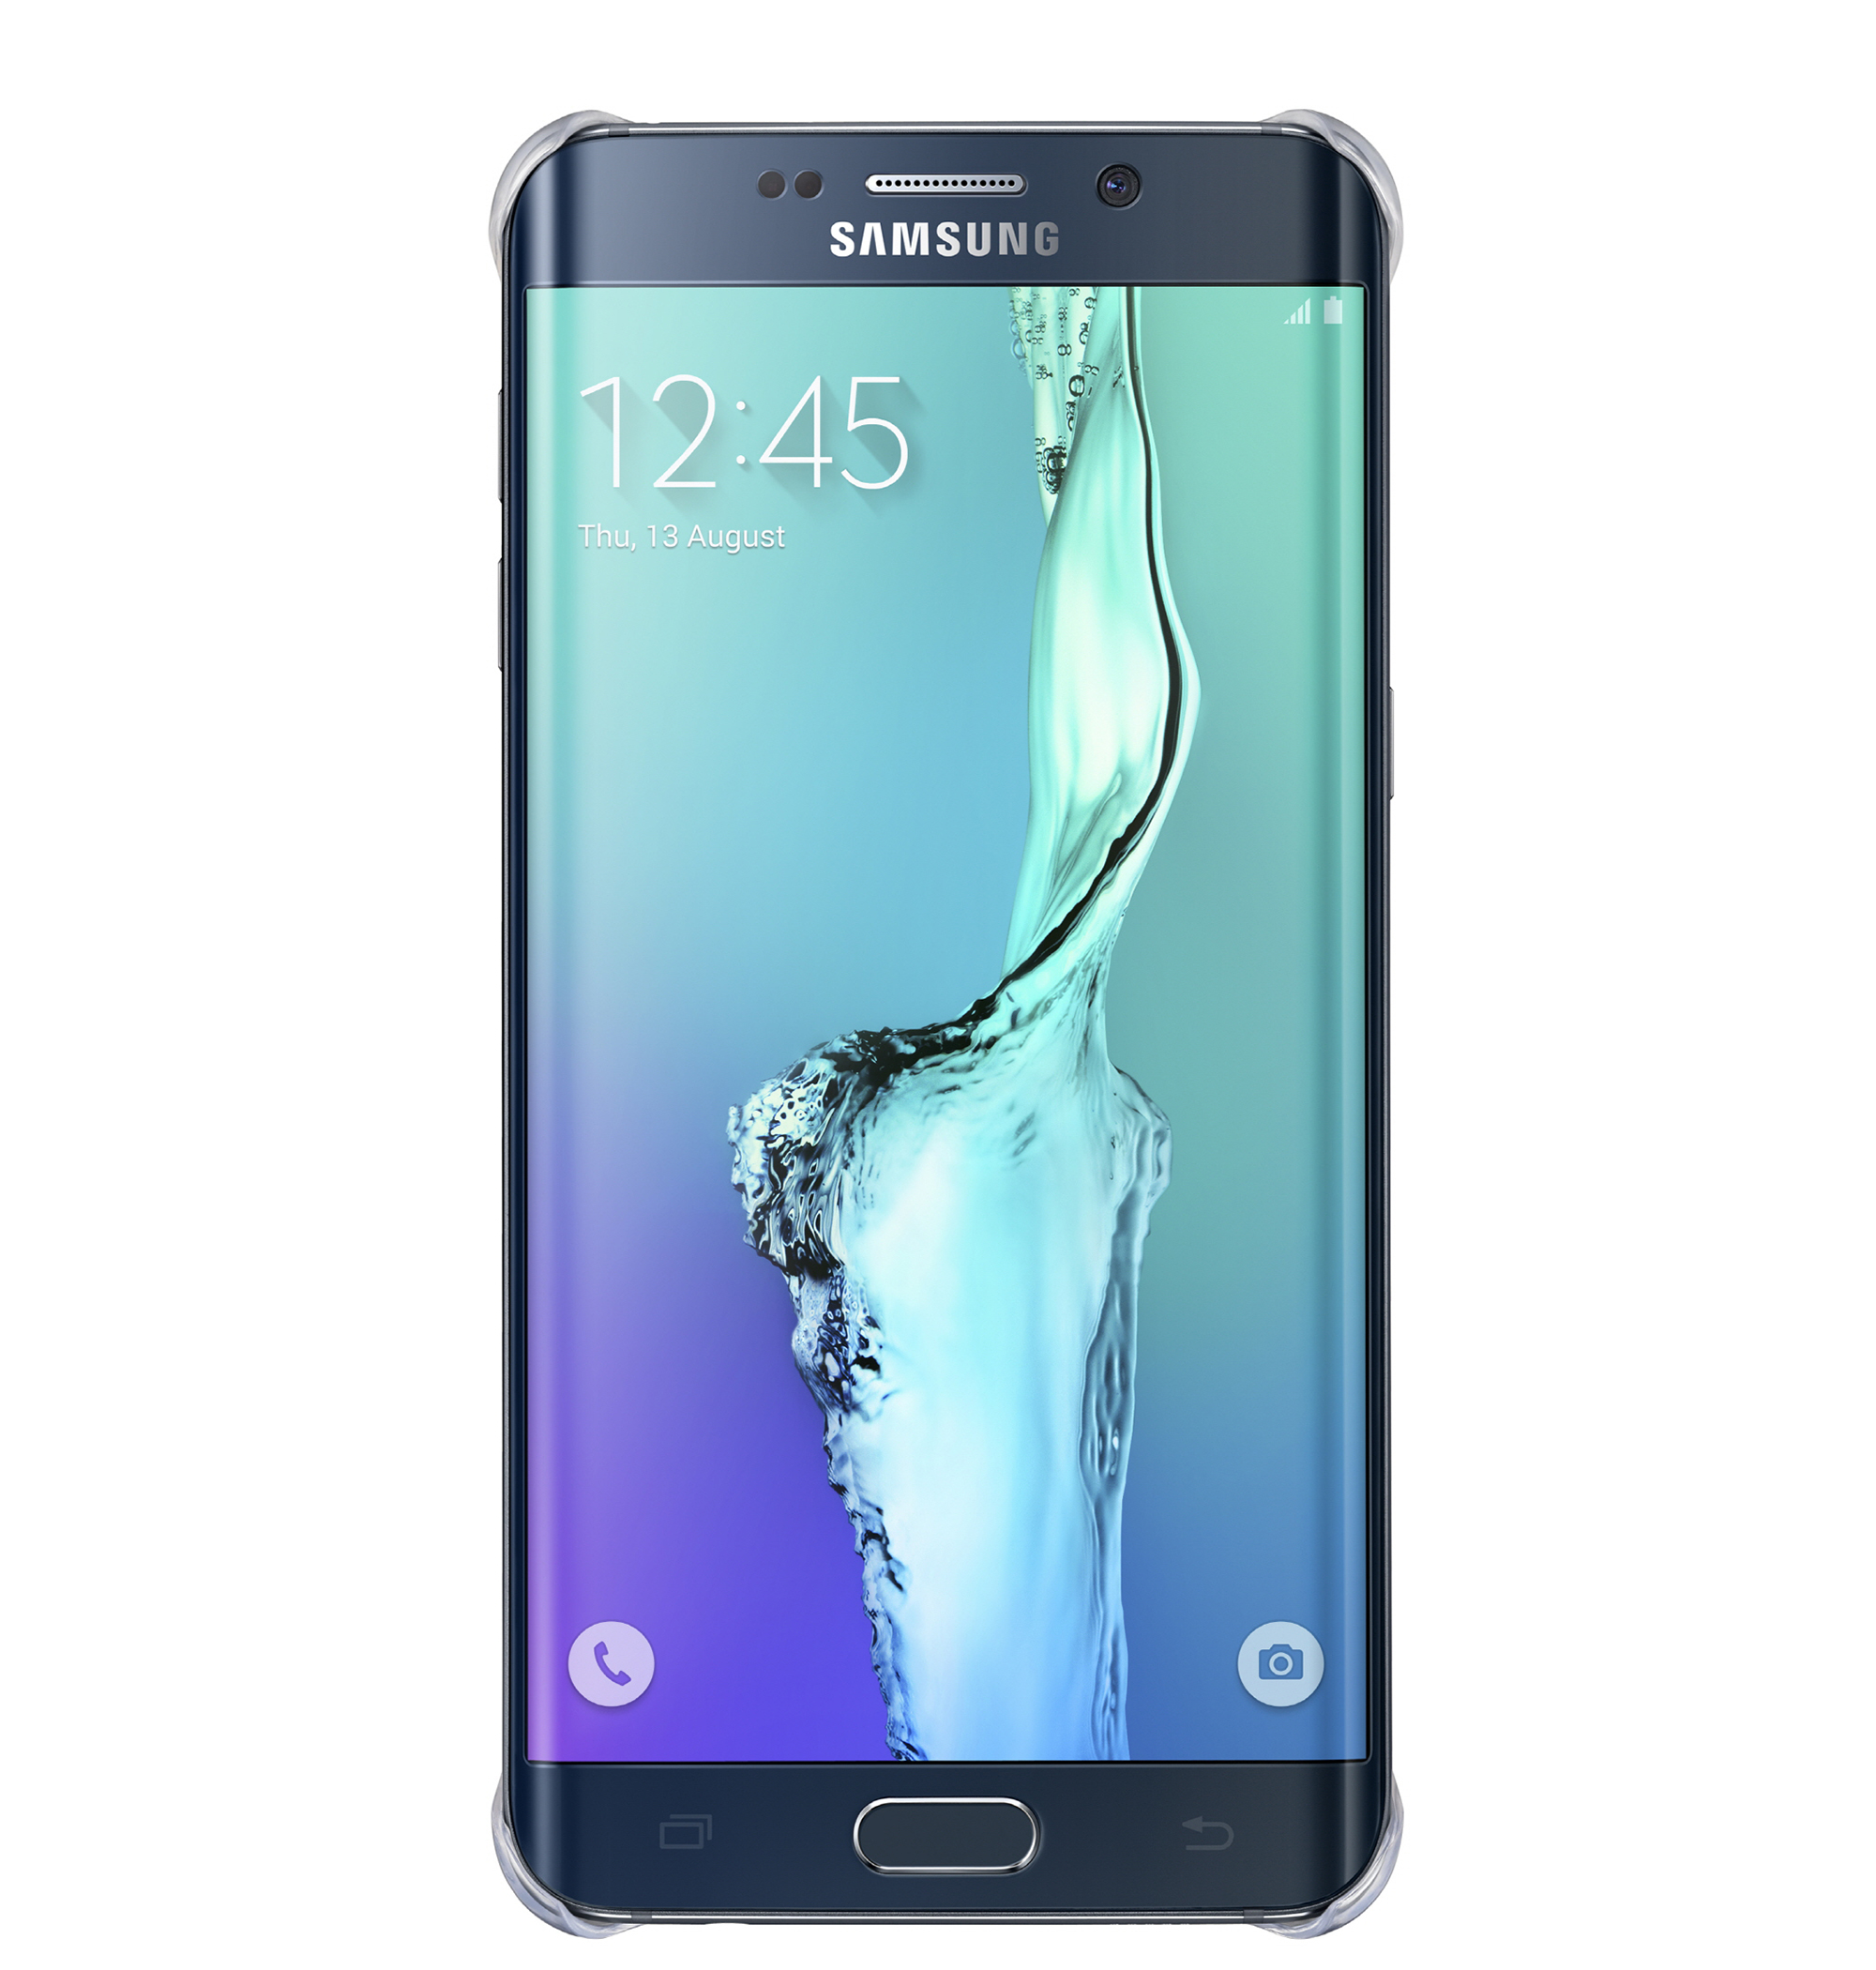 Самсунг телефон новинка цены. Samsung Galaxy s6. Samsung s6 Edge. Samsung Galaxy s6 Edge Plus. Samsung Galaxy s6 Edge+ 32gb.